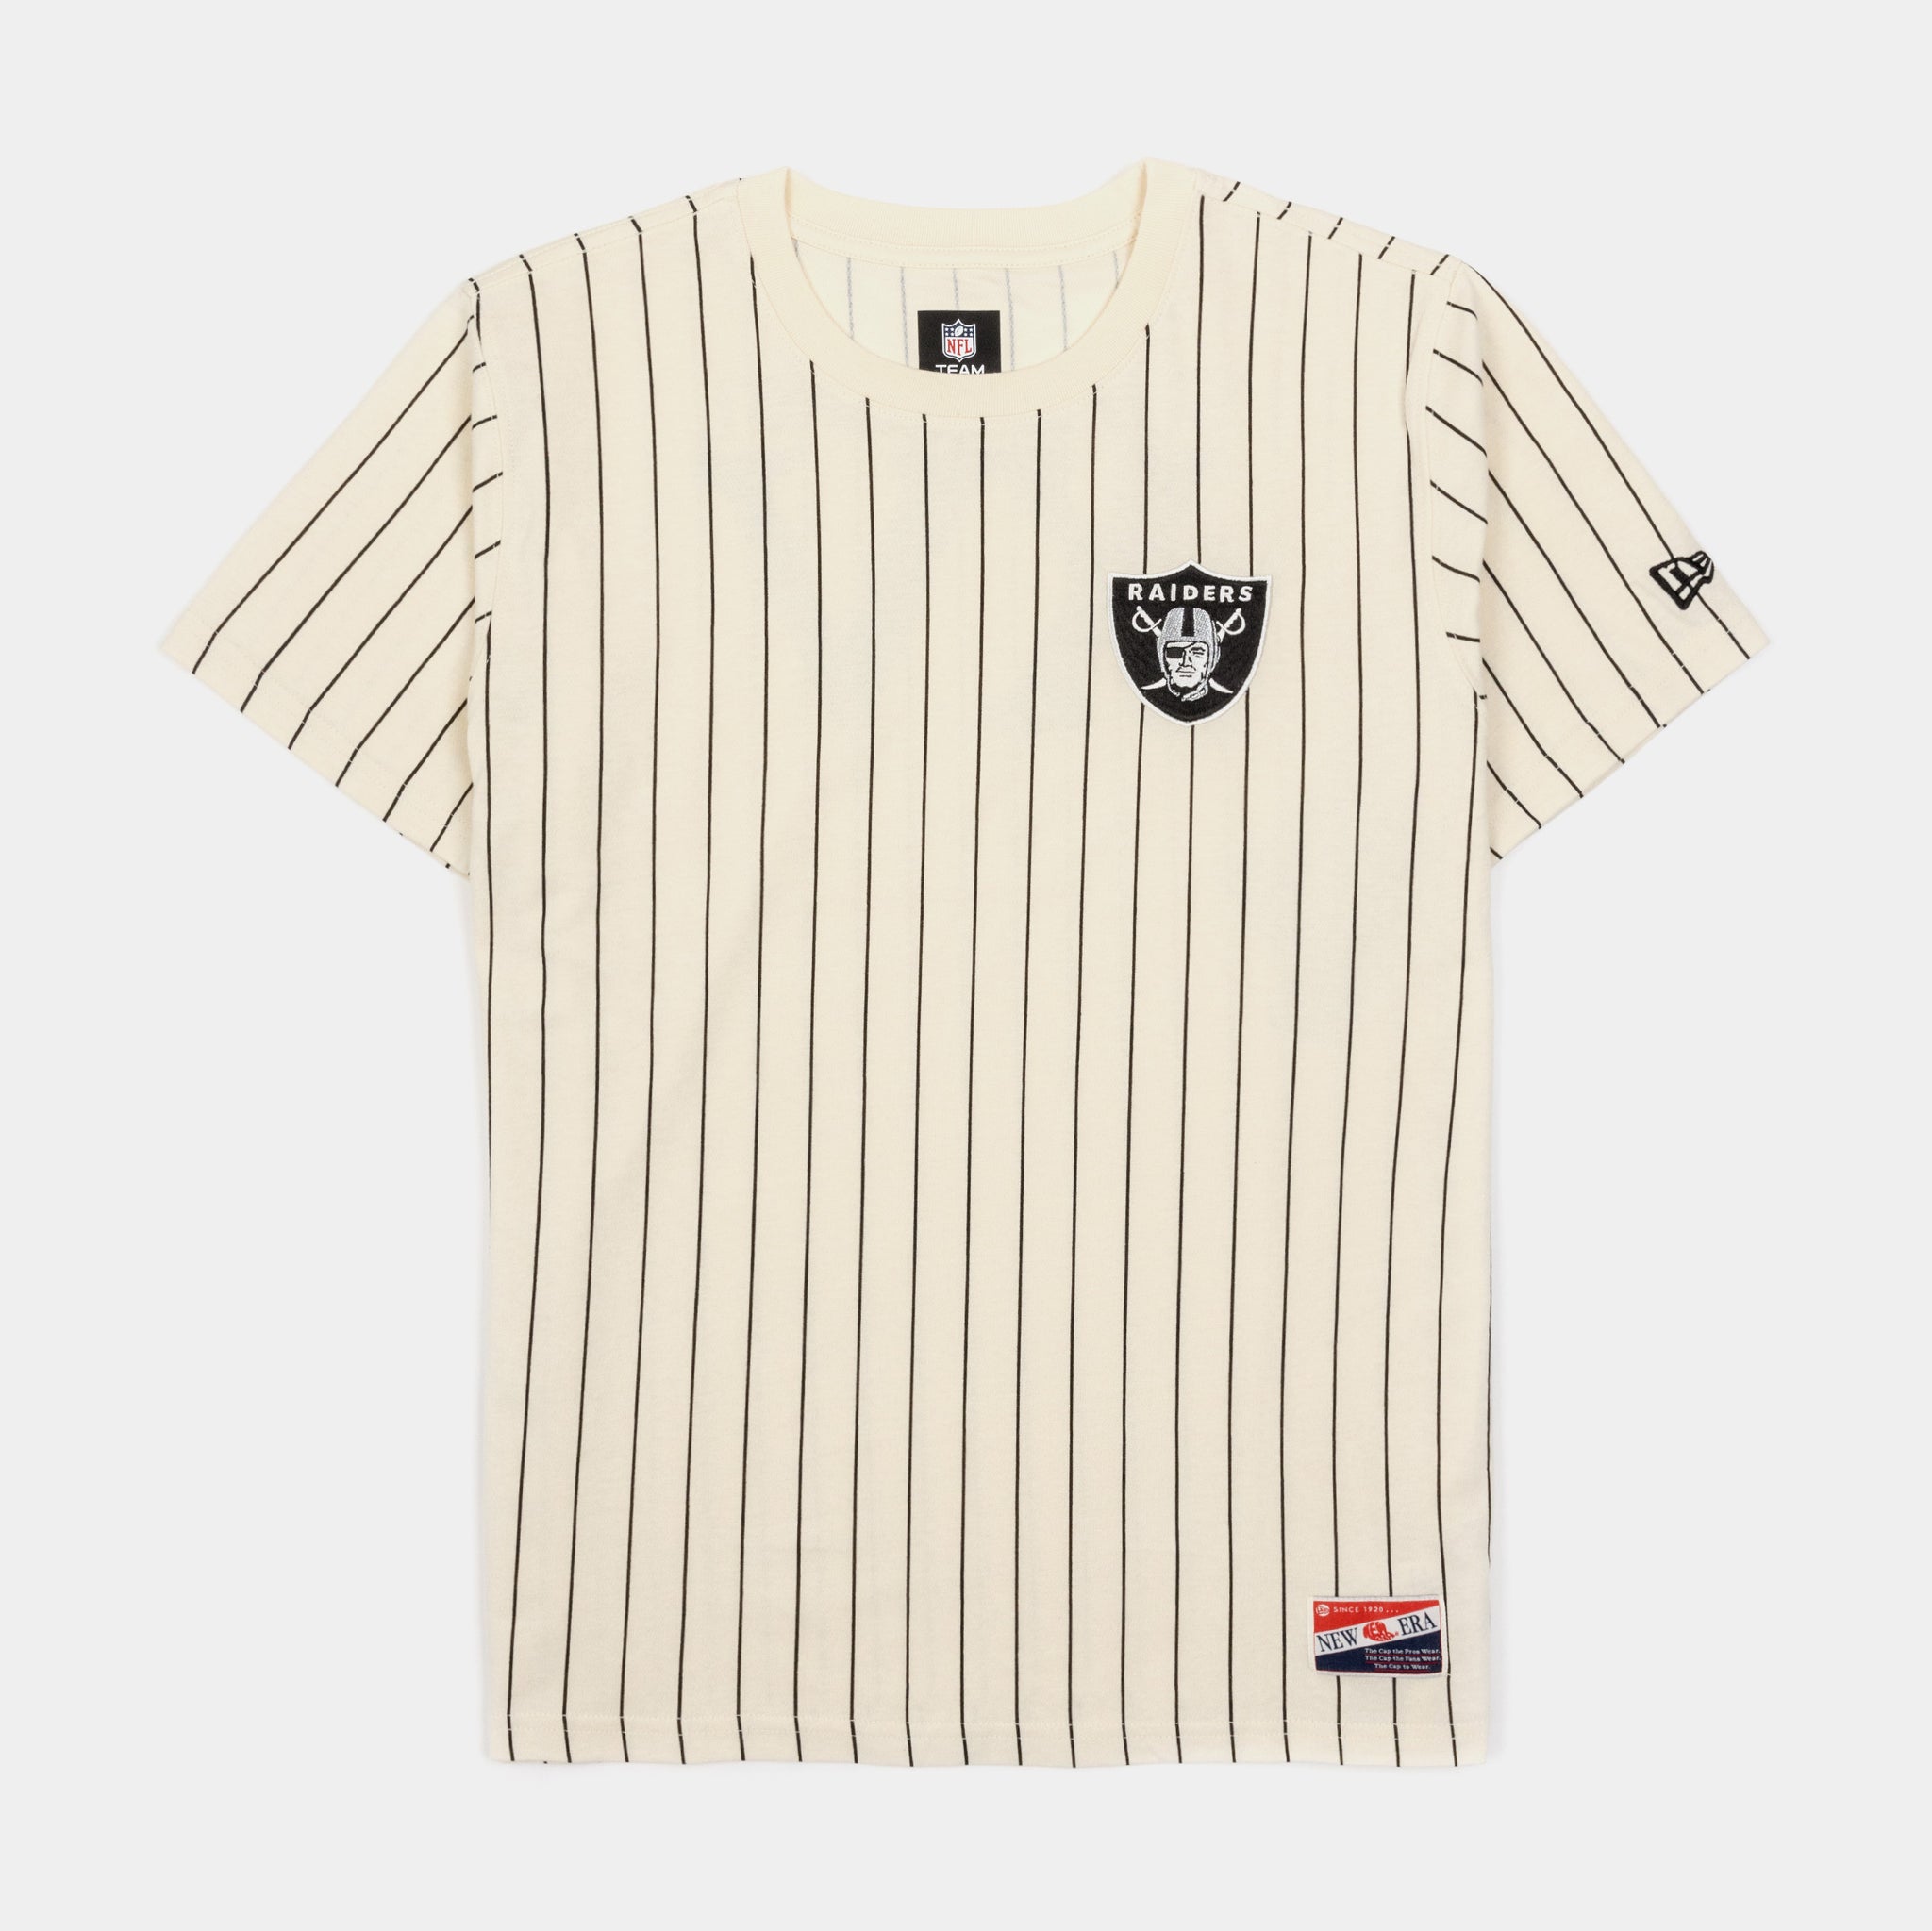 NBA Logo Black & White Striped T-Shirt Men's Size S Small Basketball